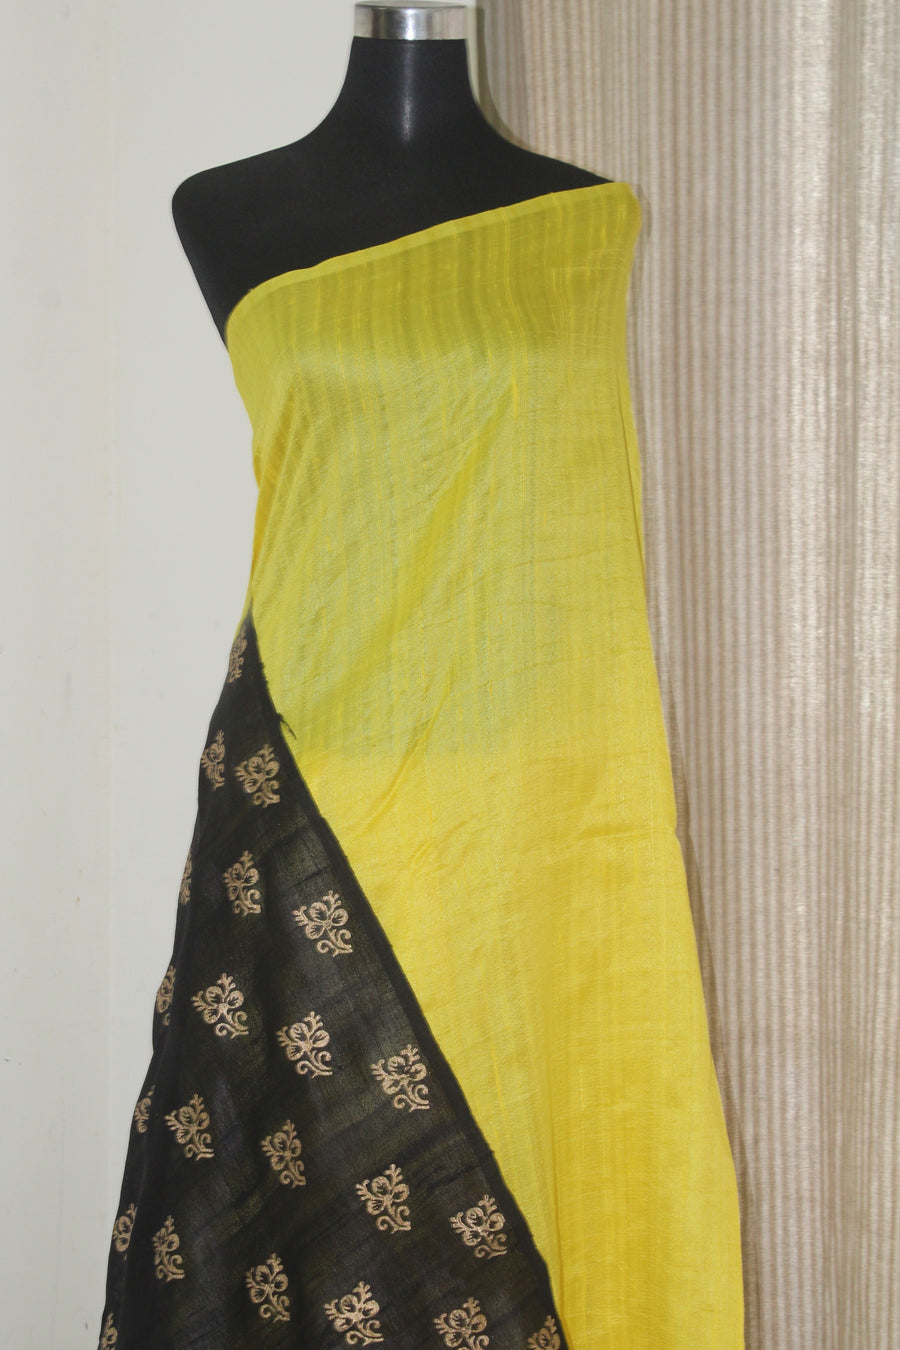 Dupion pure raw silk saree with gold print